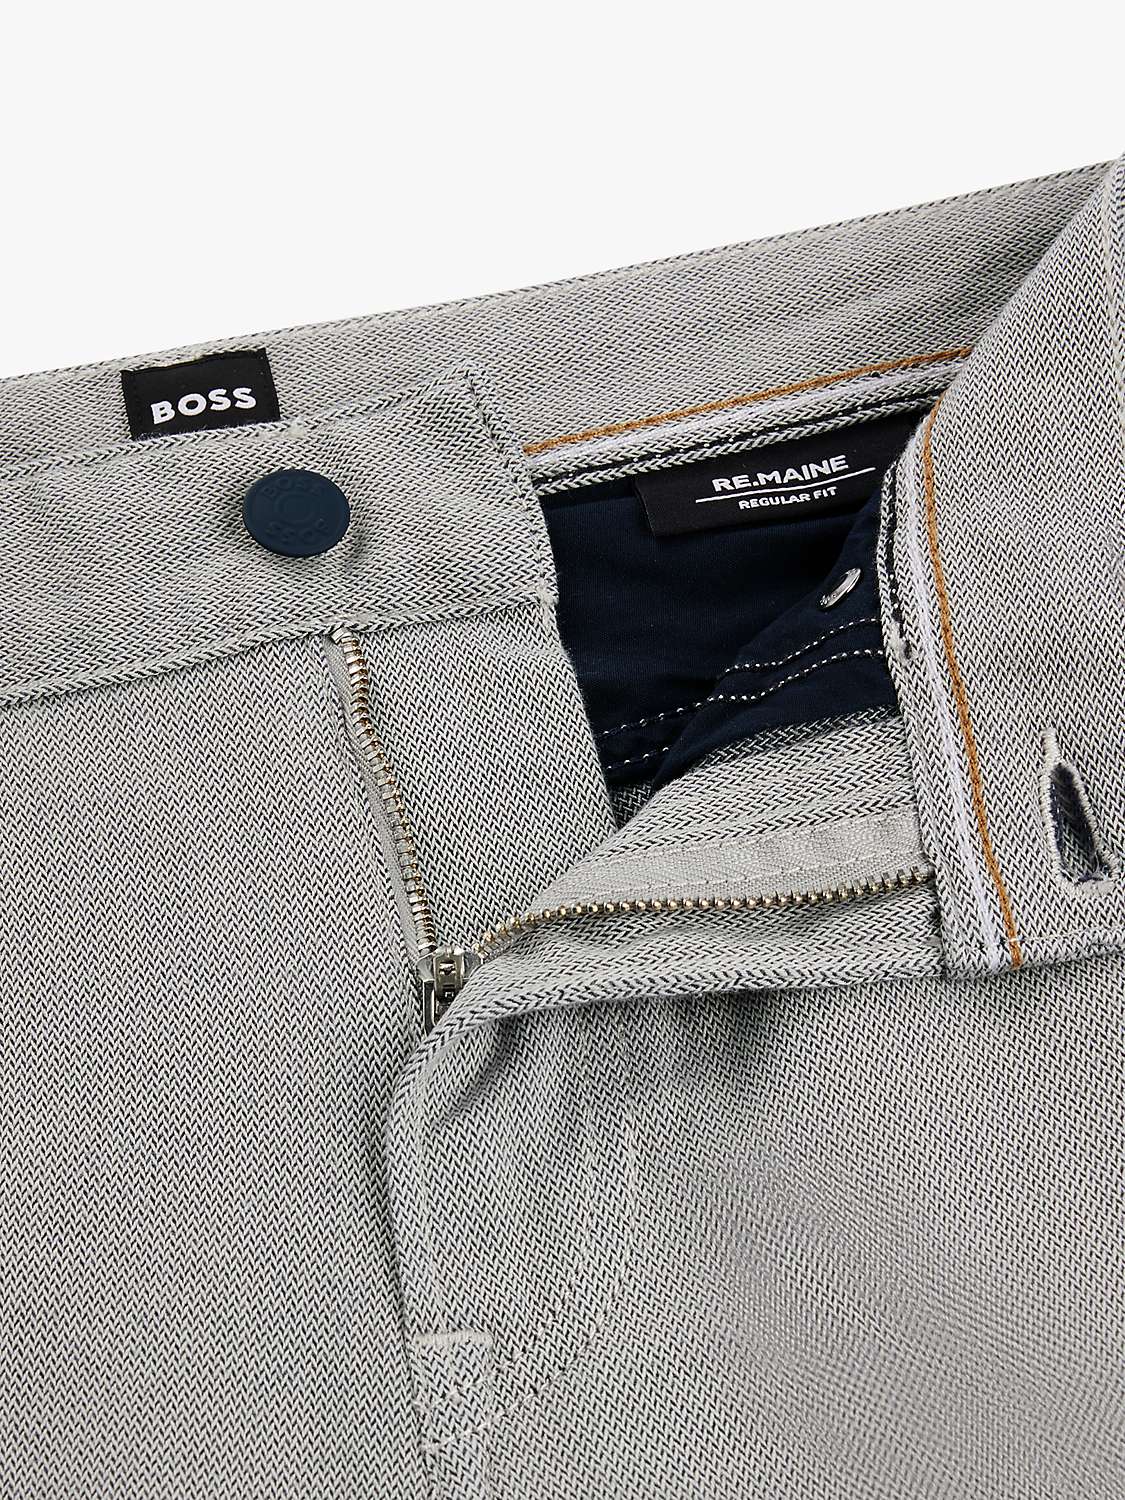 Buy BOSS Re.Maine Denim Jeans, Dark Blue Online at johnlewis.com